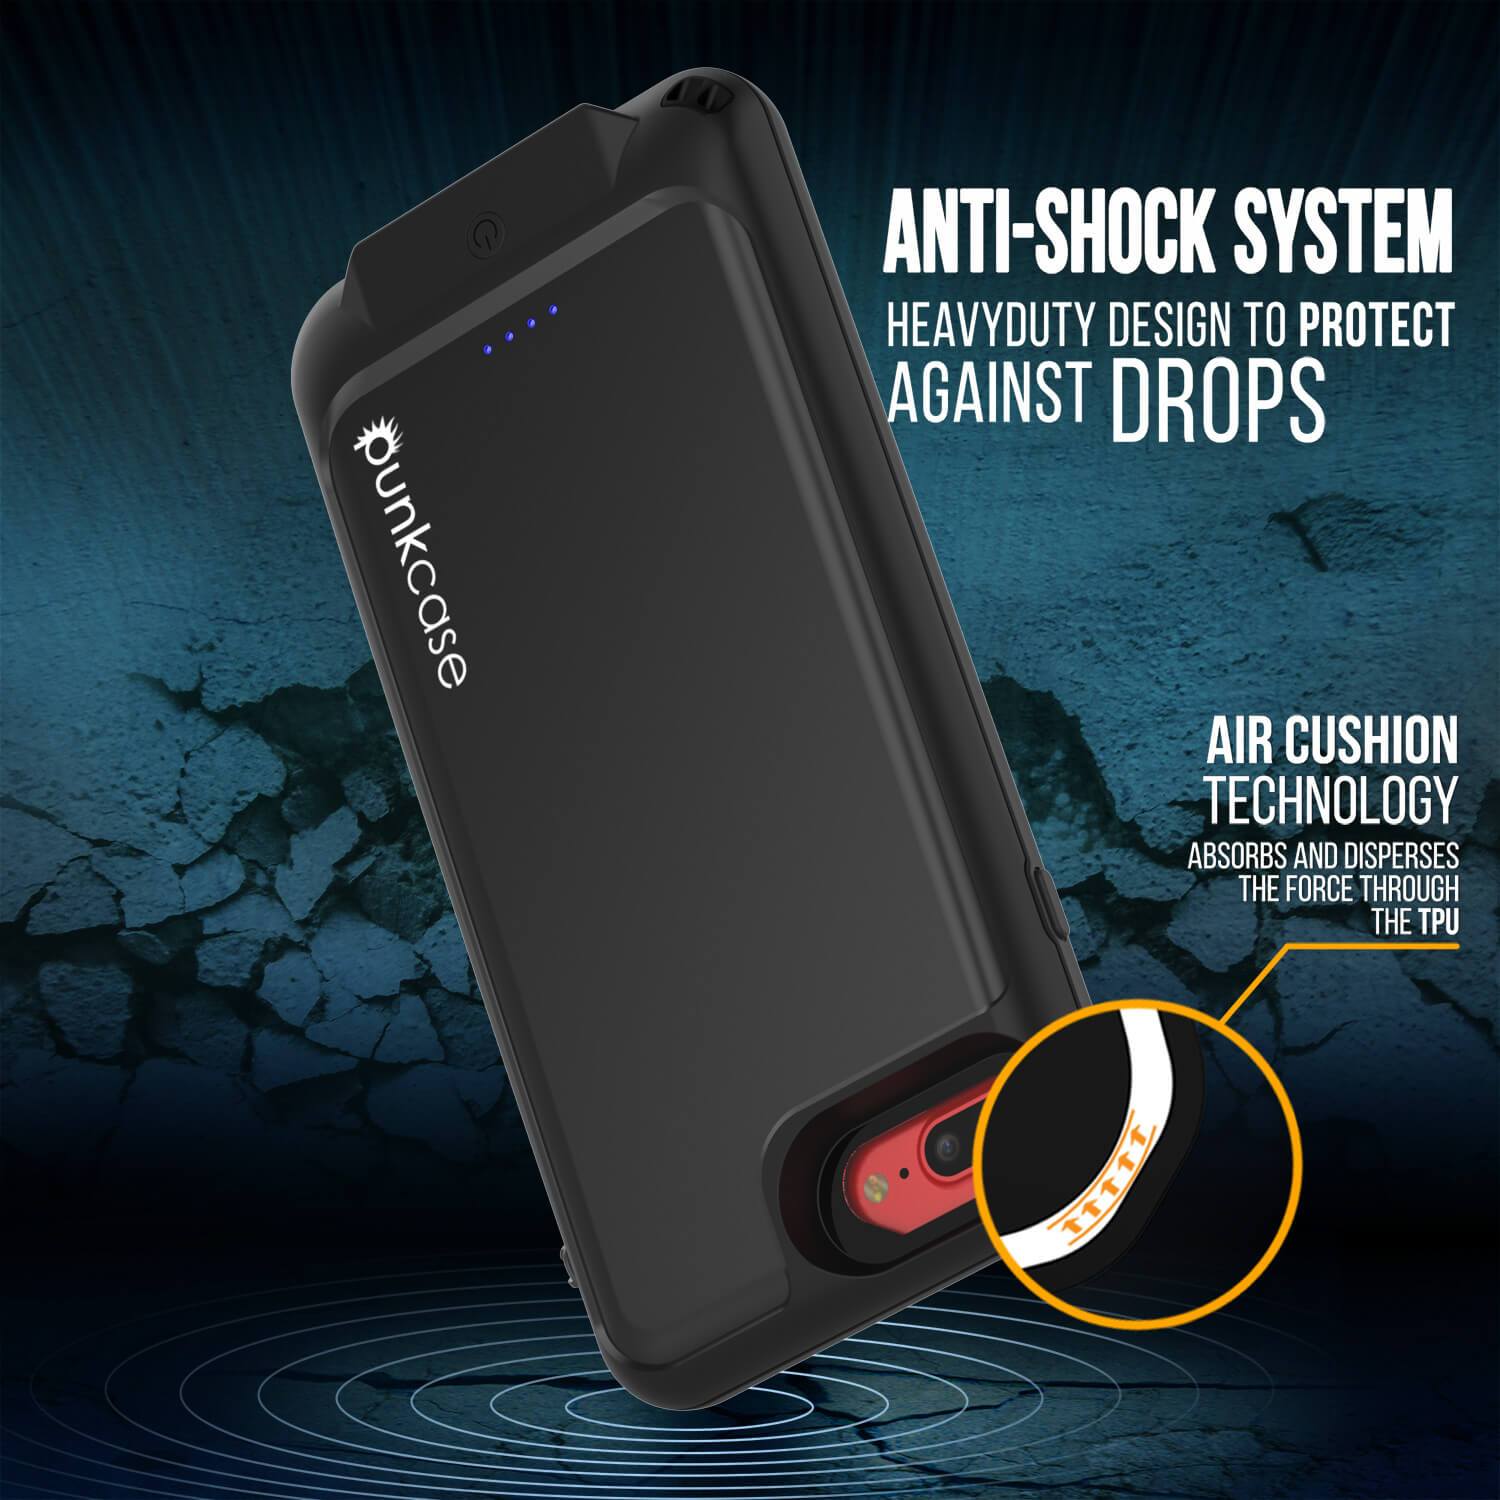 PunkJuice iPhone 8+/7+ Plus Battery Case Black - Waterproof Slim Power Juice Bank with 4300mAh